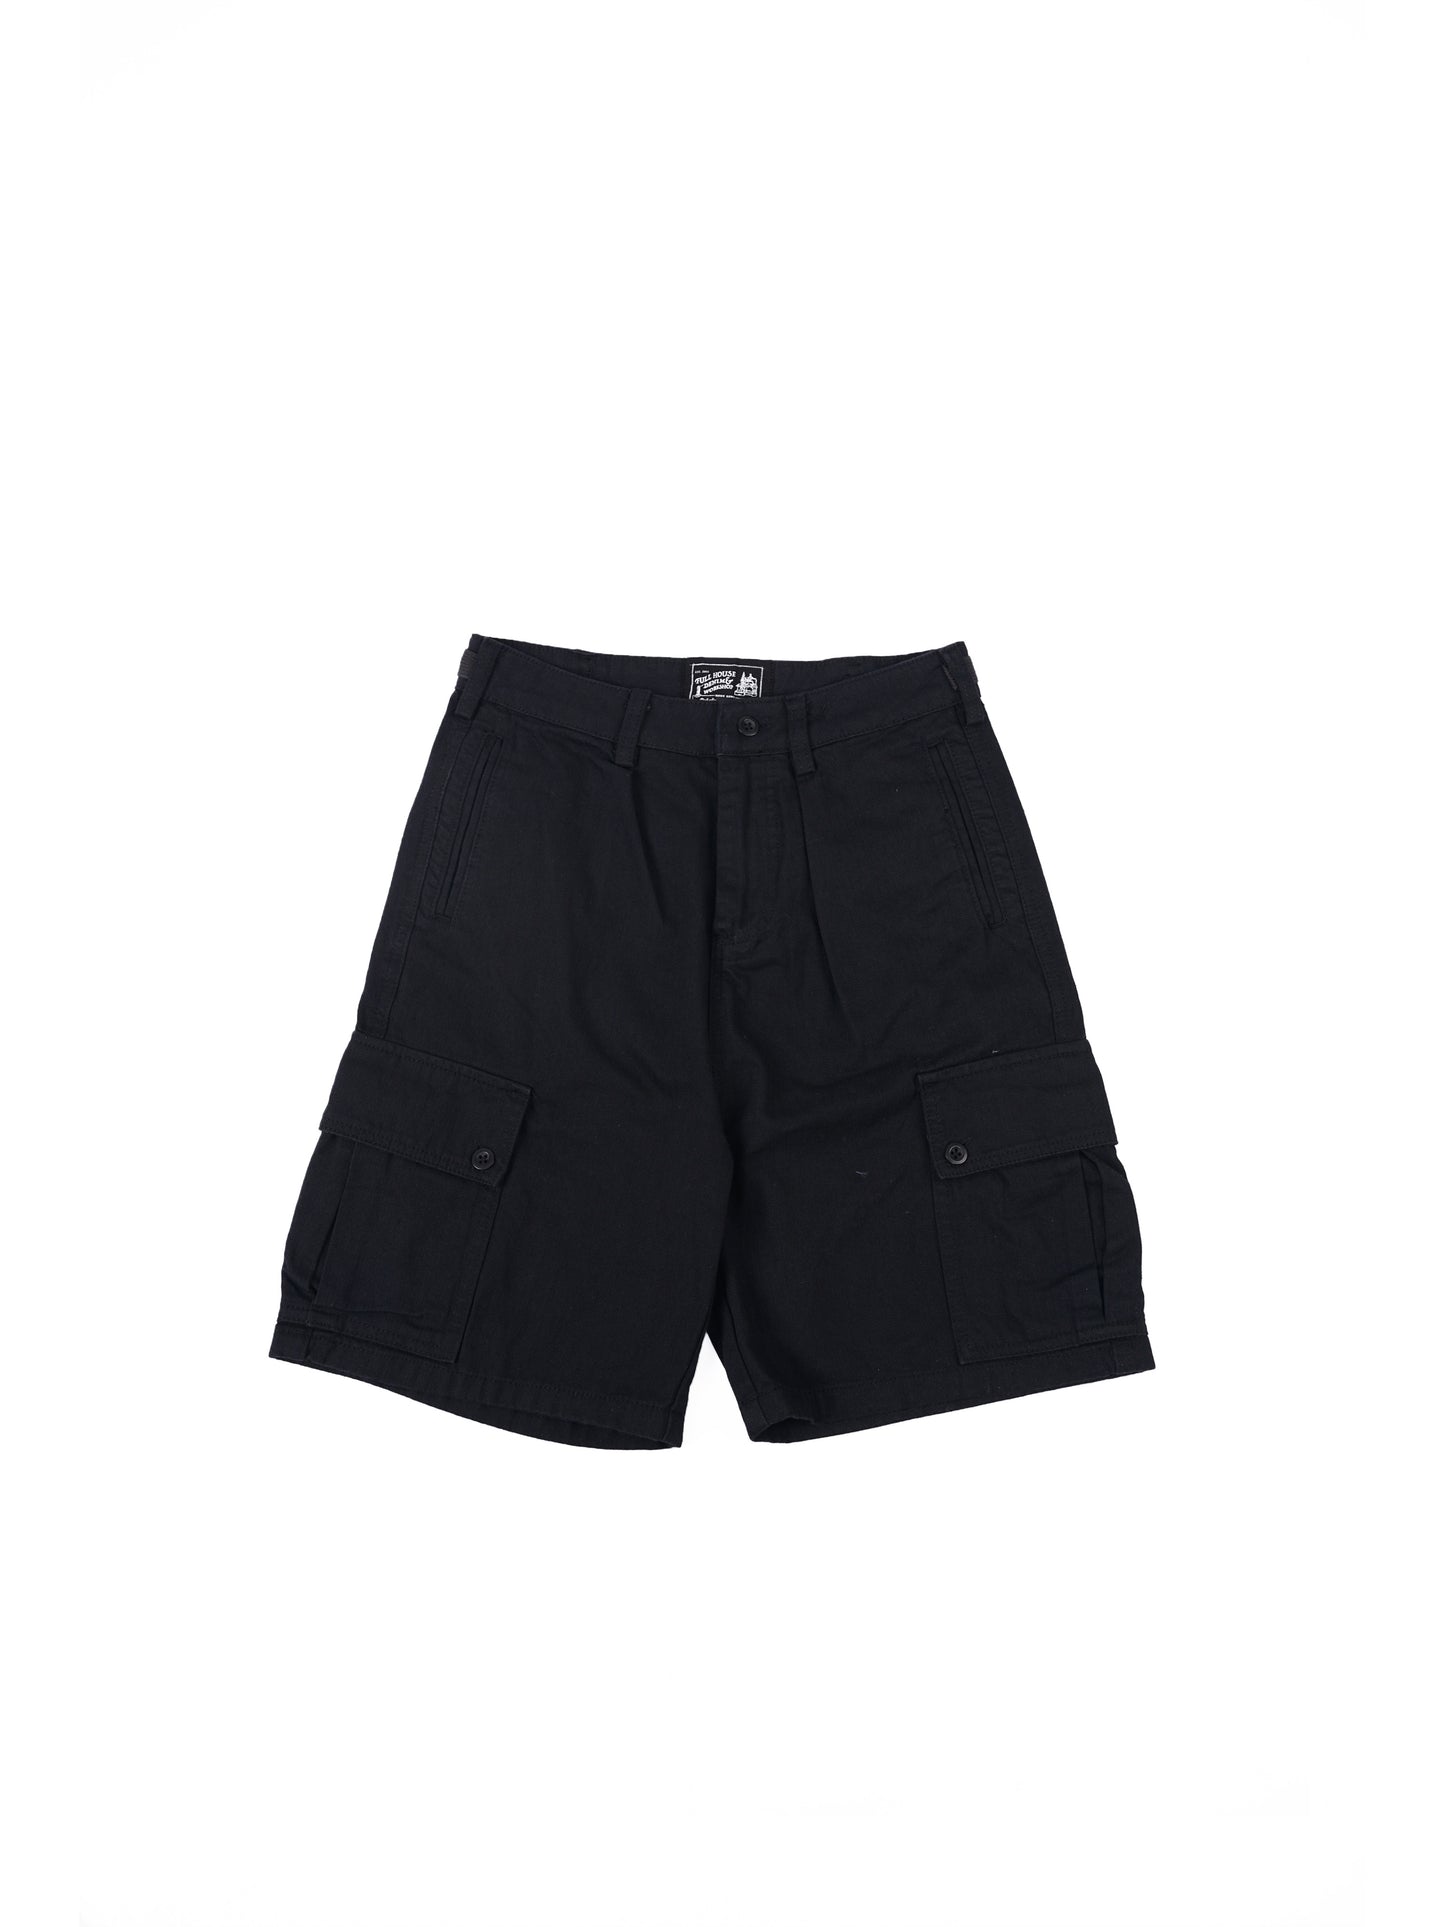 HBT04 Army Shorts 人字紋軍裝短褲